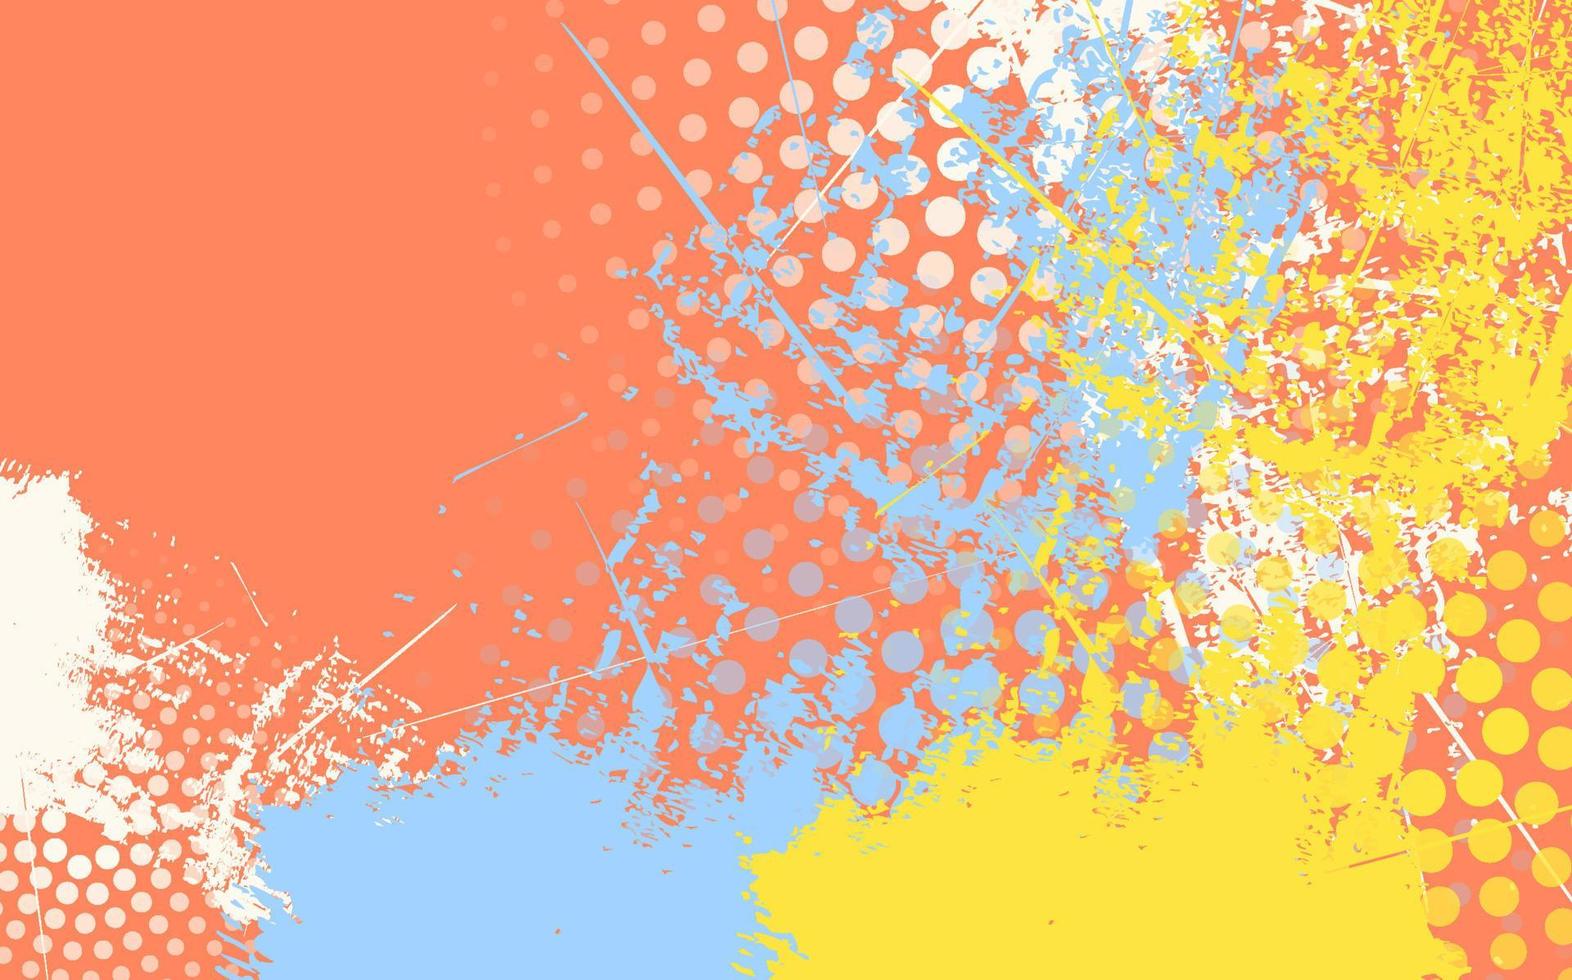 abstrakt grunge textur stänk måla pastell Färg orange bakgrund vektor